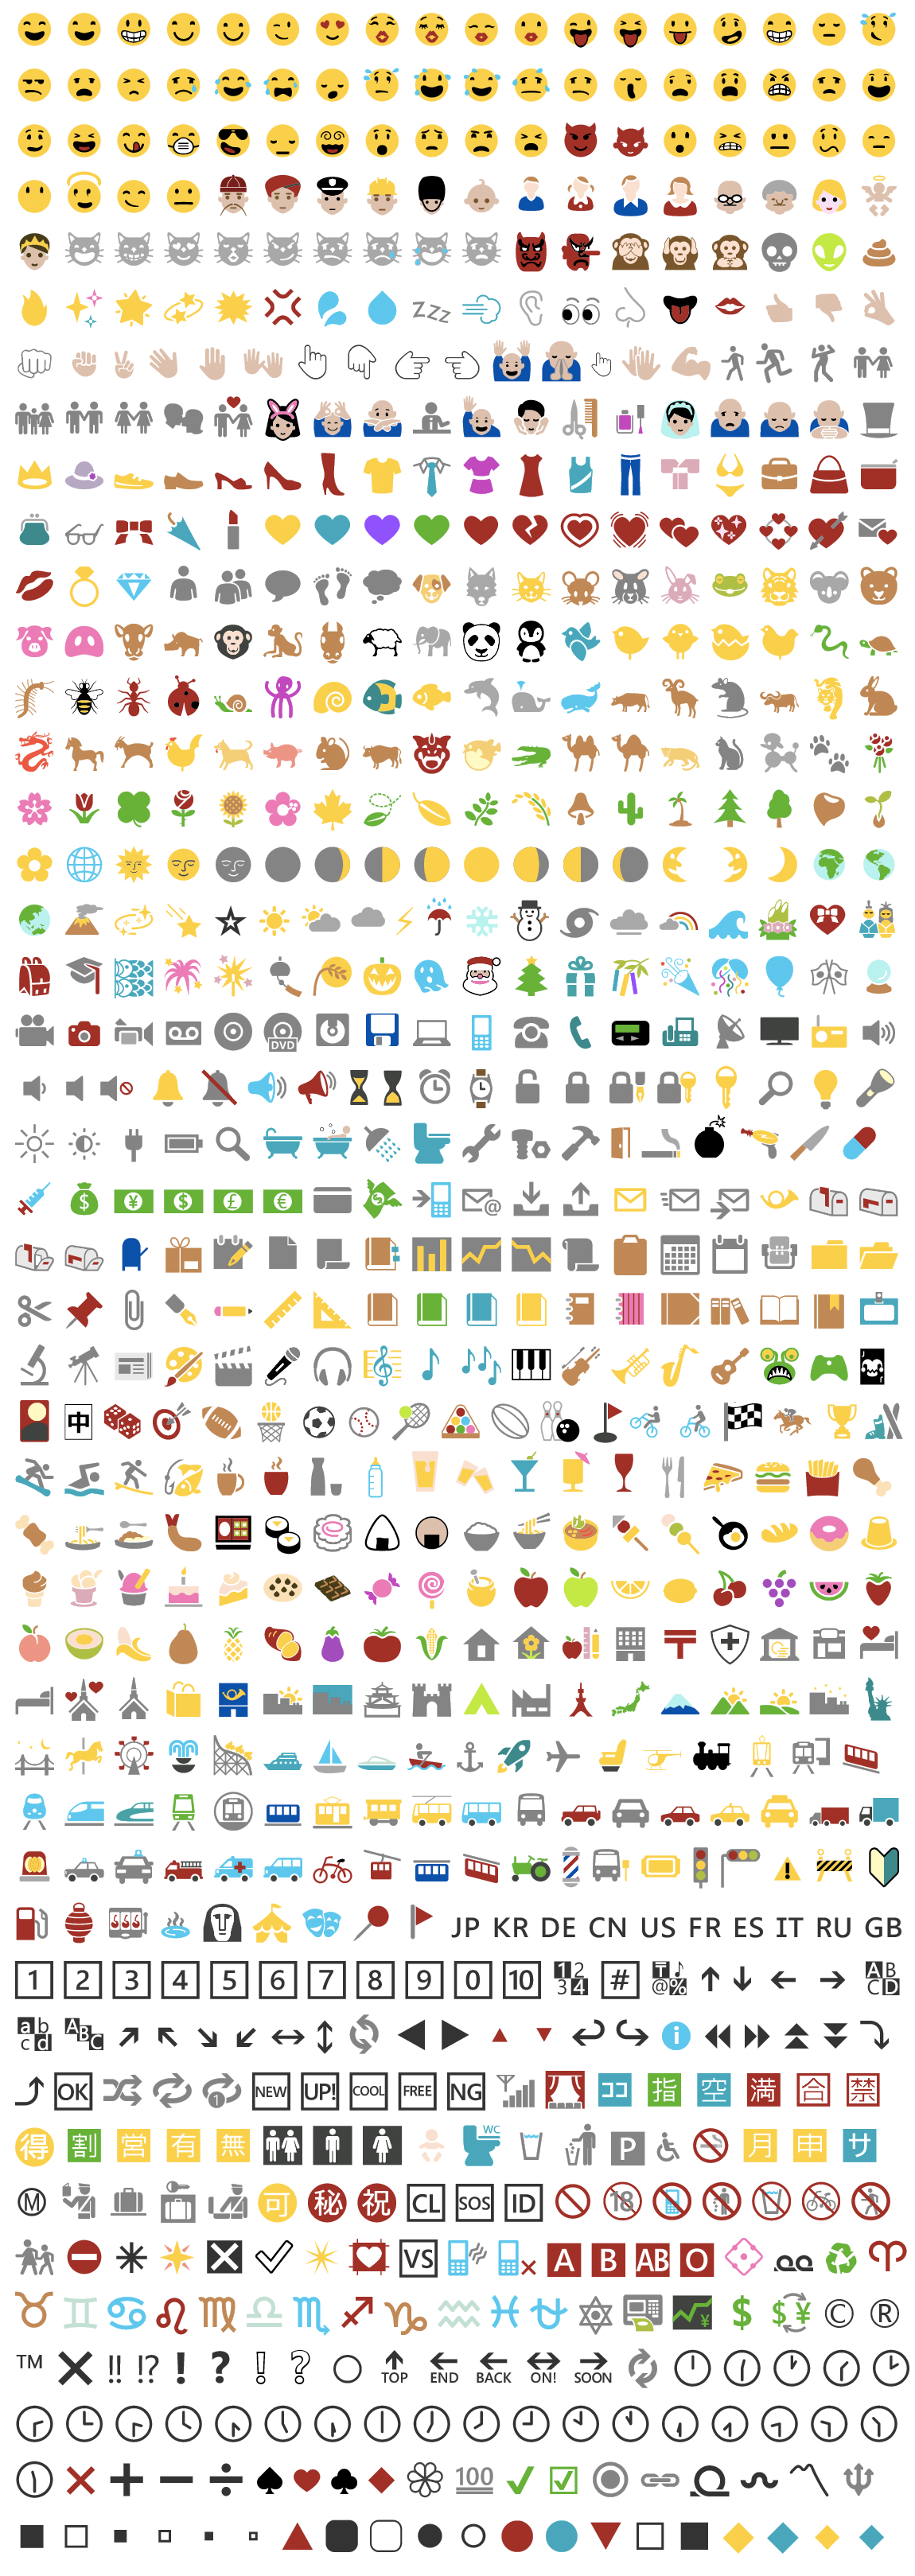 Emoji Font Mac Download